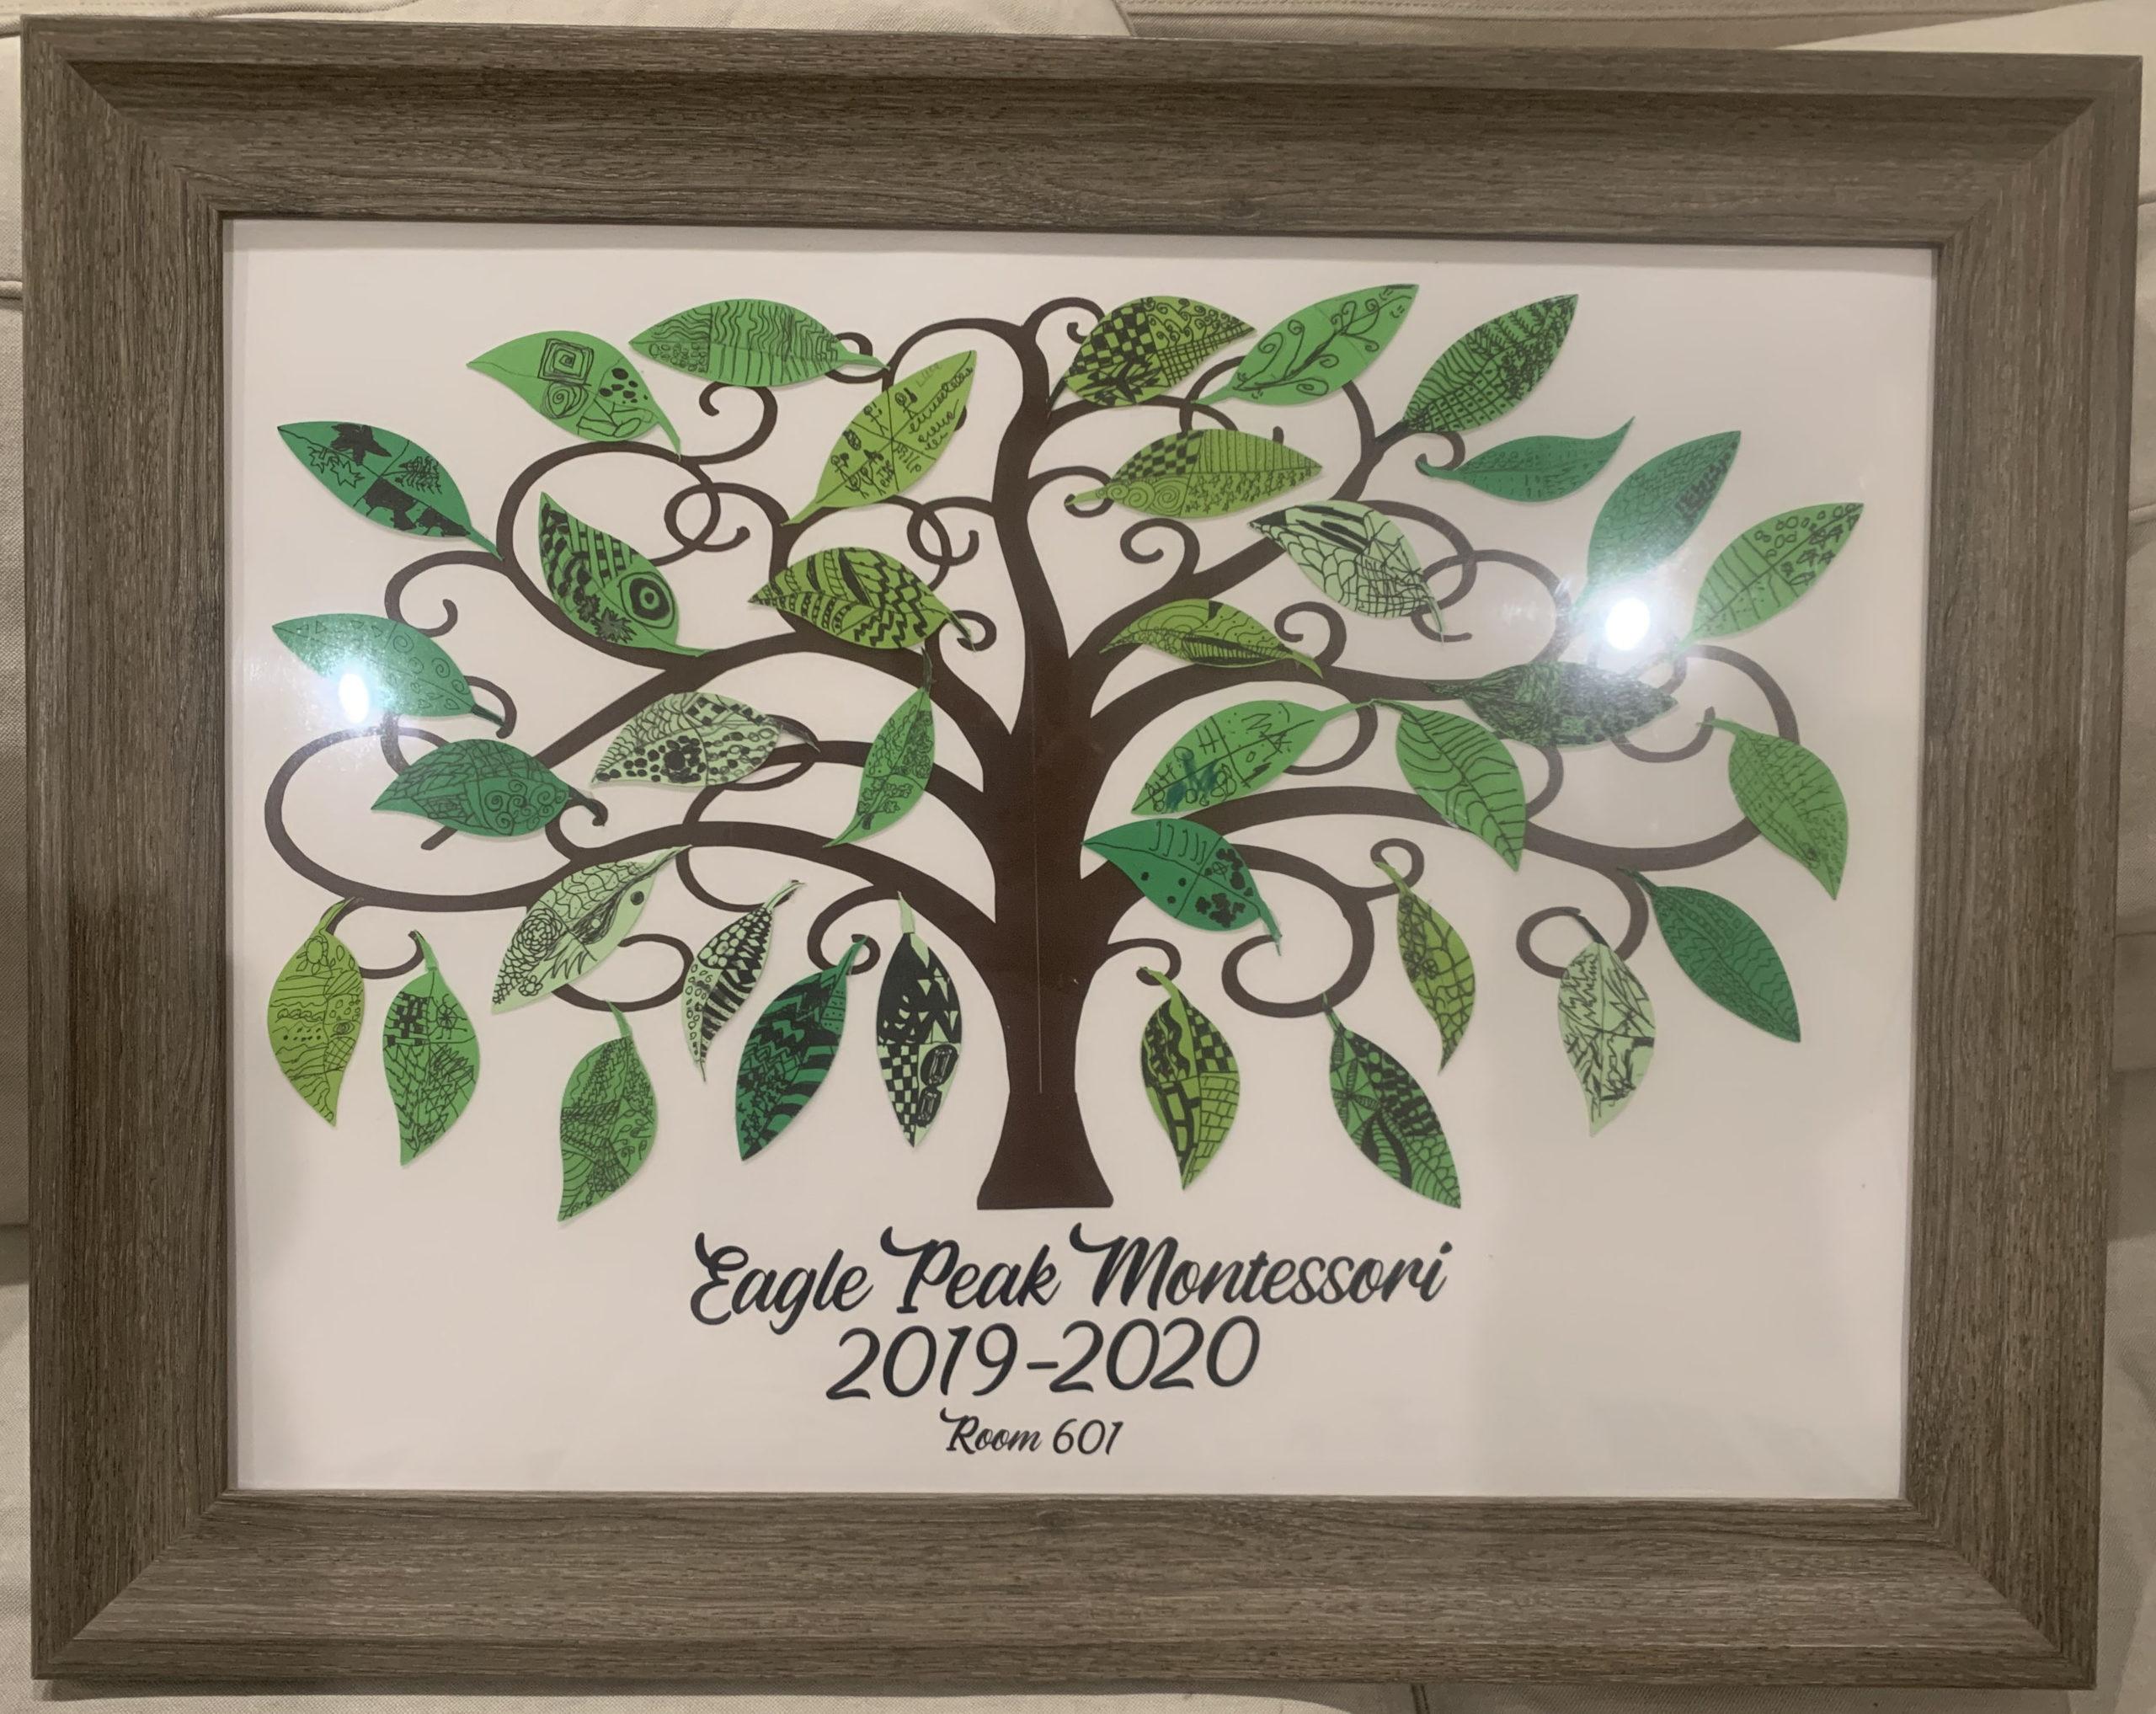 Auction Item of the Day orignal artwork beautiful tree with custom leaves framed in glass cfep eagle peak montessori school